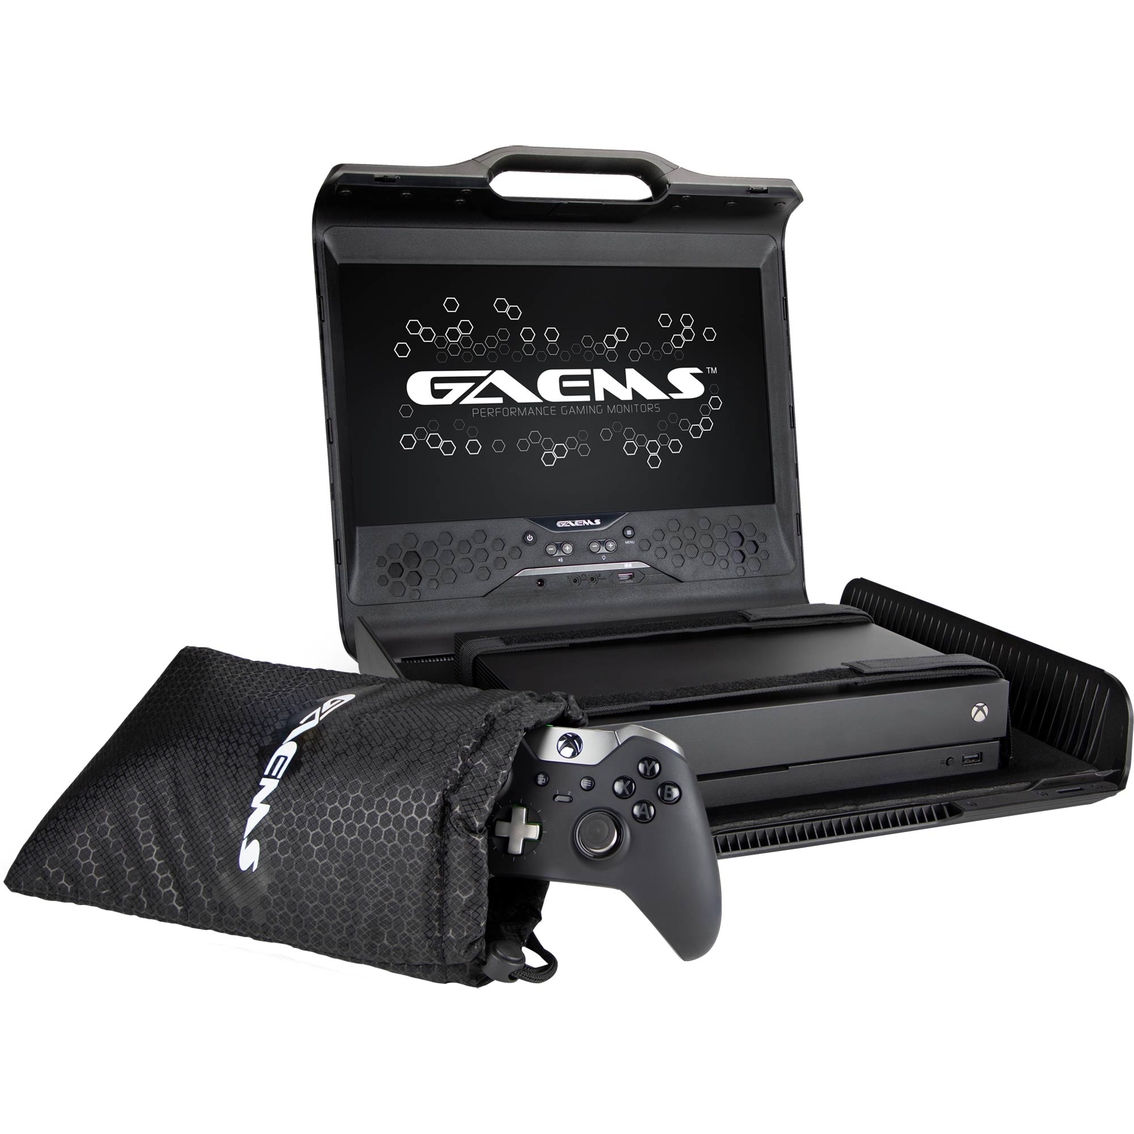 Gaems Sentinel Pro Xp 1080p Portable Gaming Monitor Hard Case